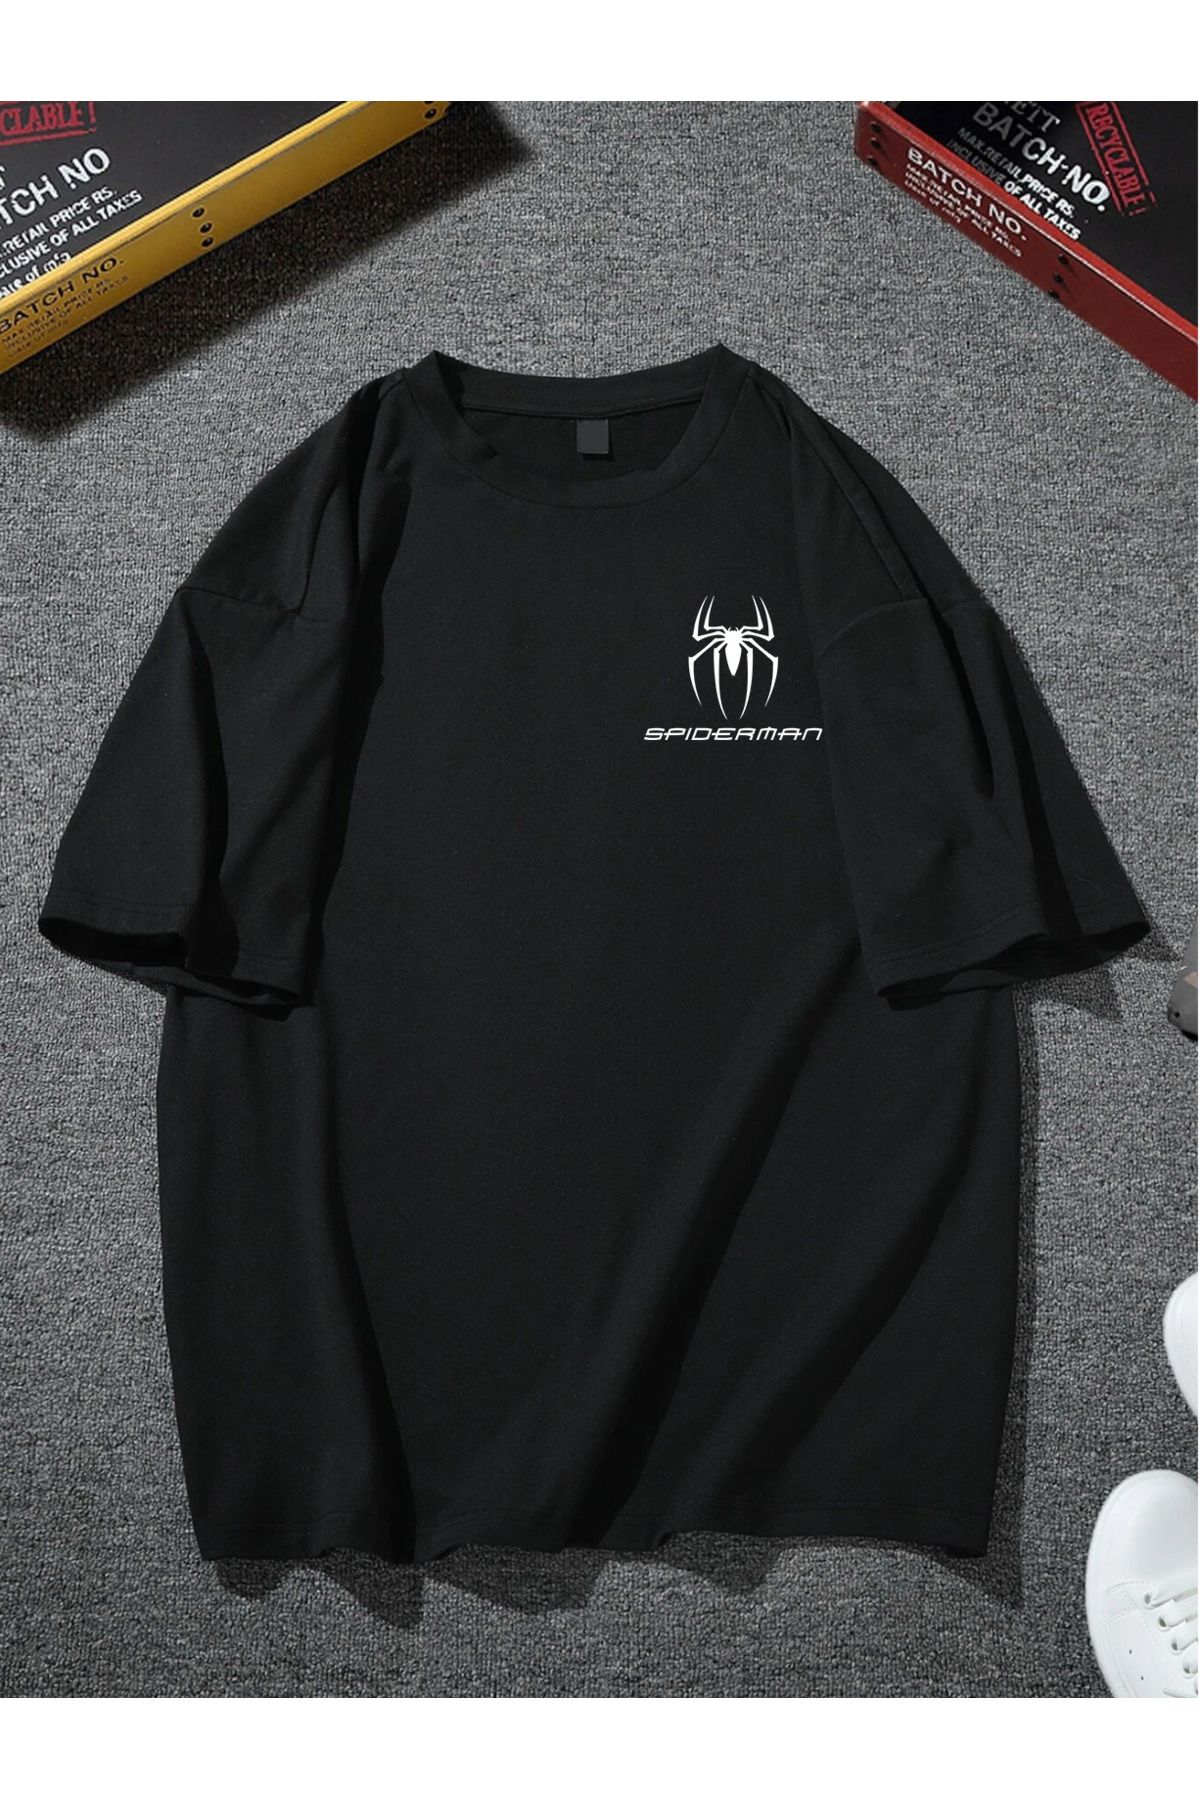 kahire Unisex Siyah Oversize Spiderman Baskılı T-shirt